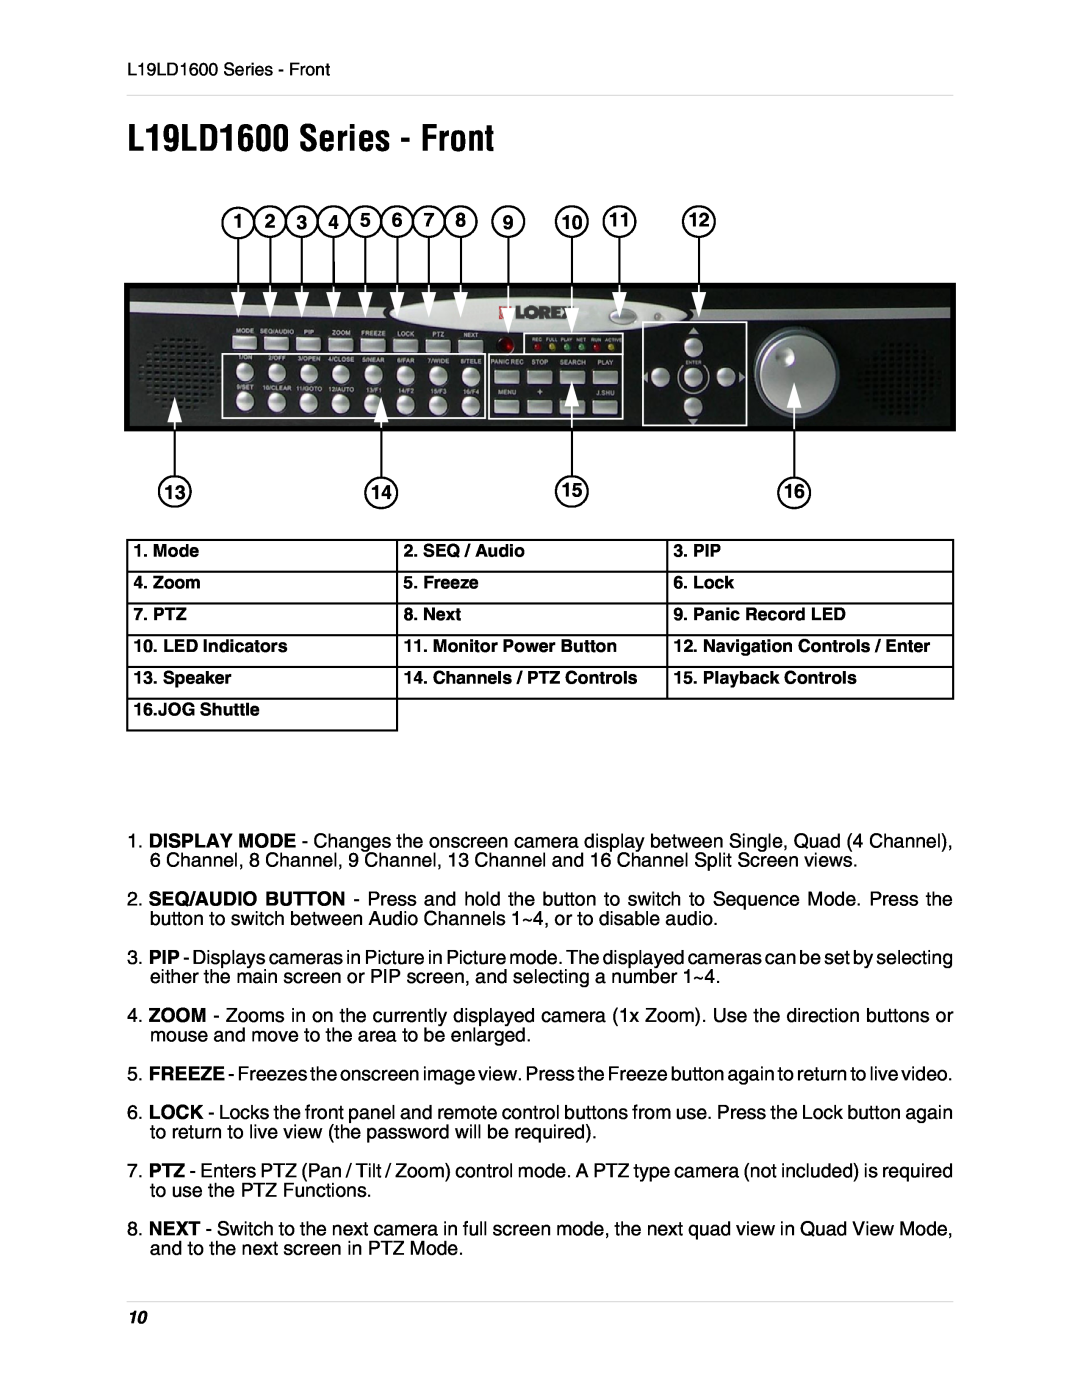 LOREX Technology L19lD1616501 instruction manual L19LD1600 Series - Front 